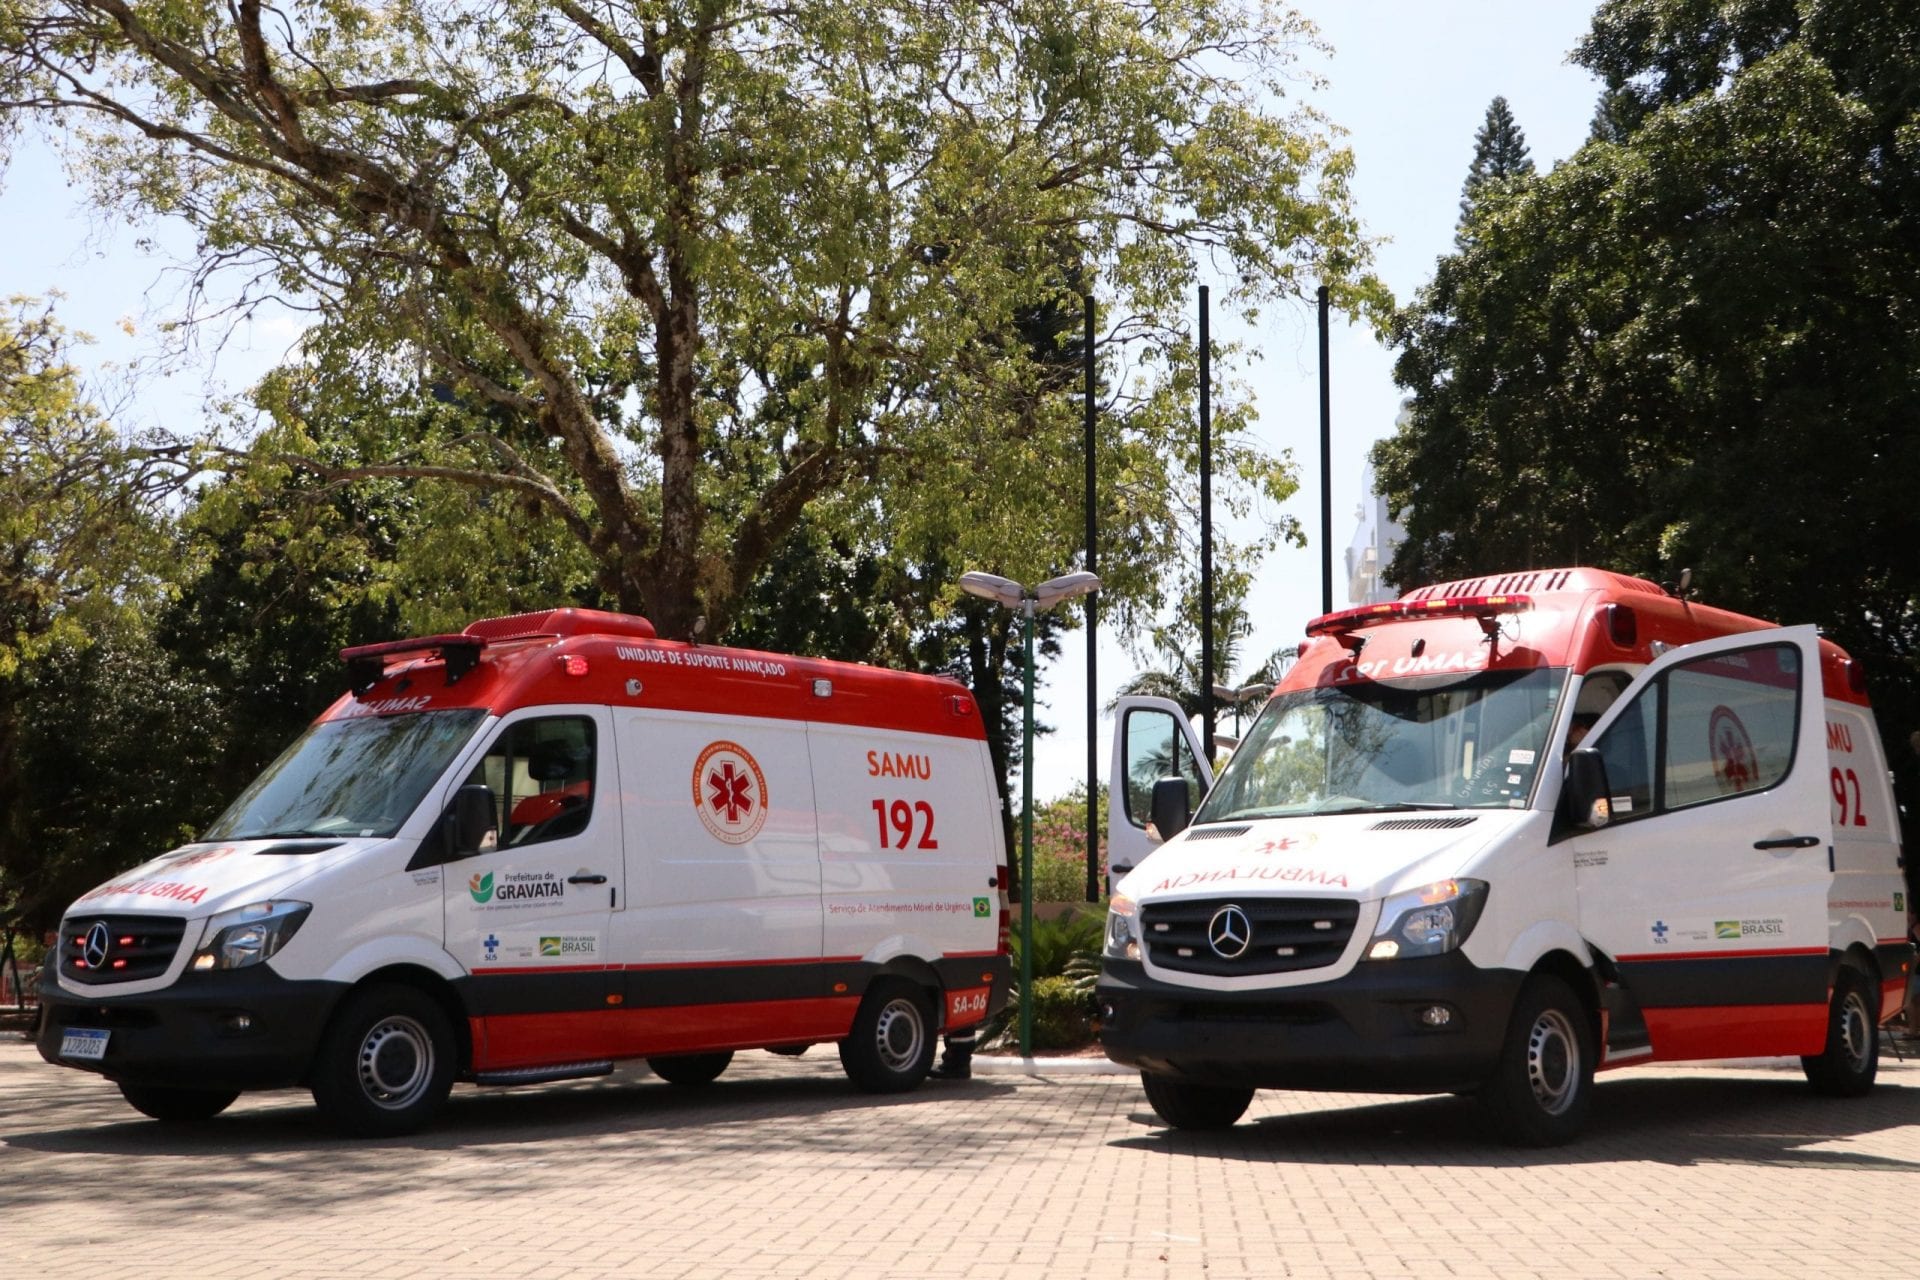 Prefeito Marco Alba participa da entrega de duas ambulâncias novas para o Samu Gravataí